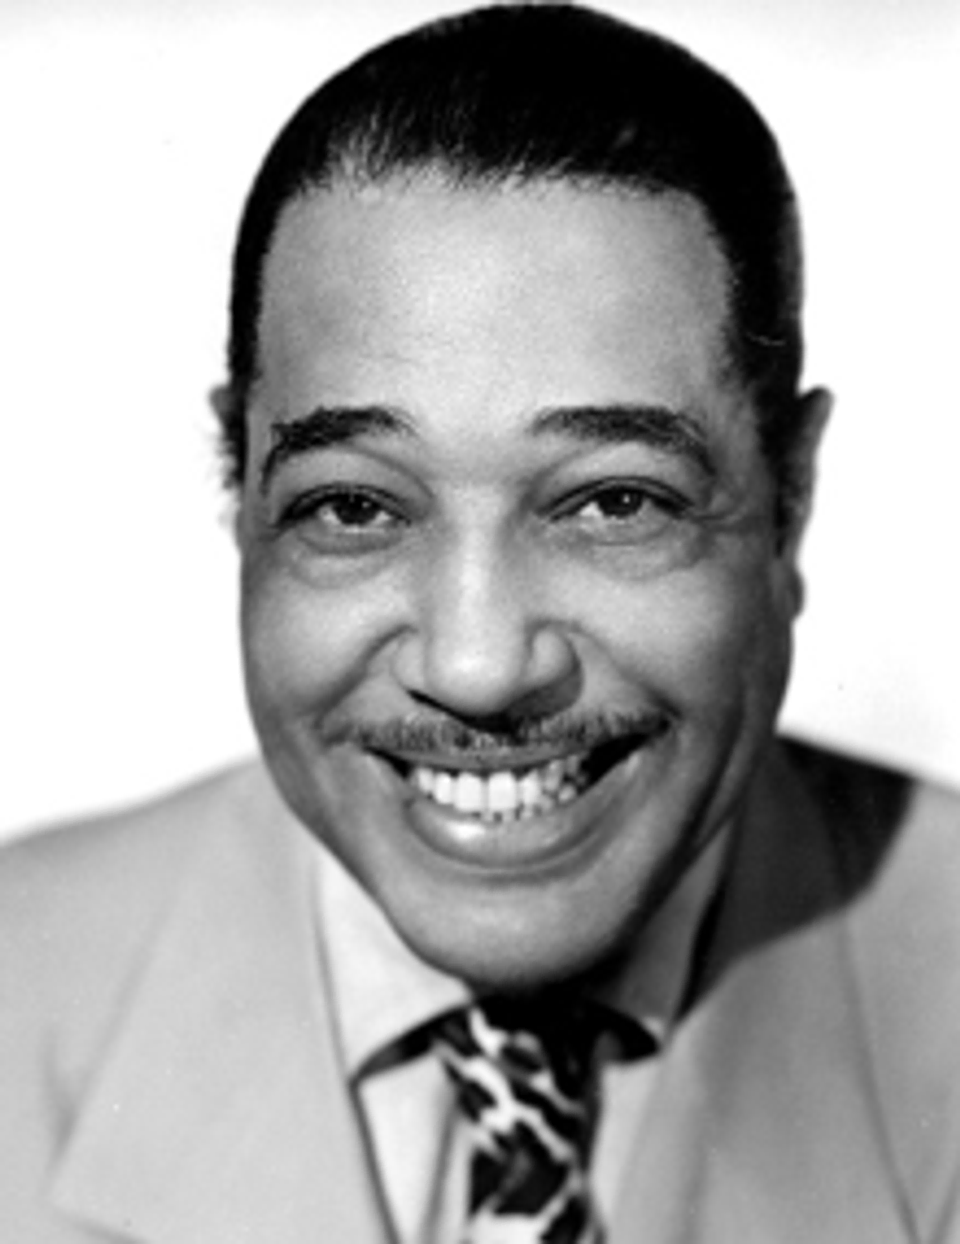 A photograph of Duke Ellington in the 1940s